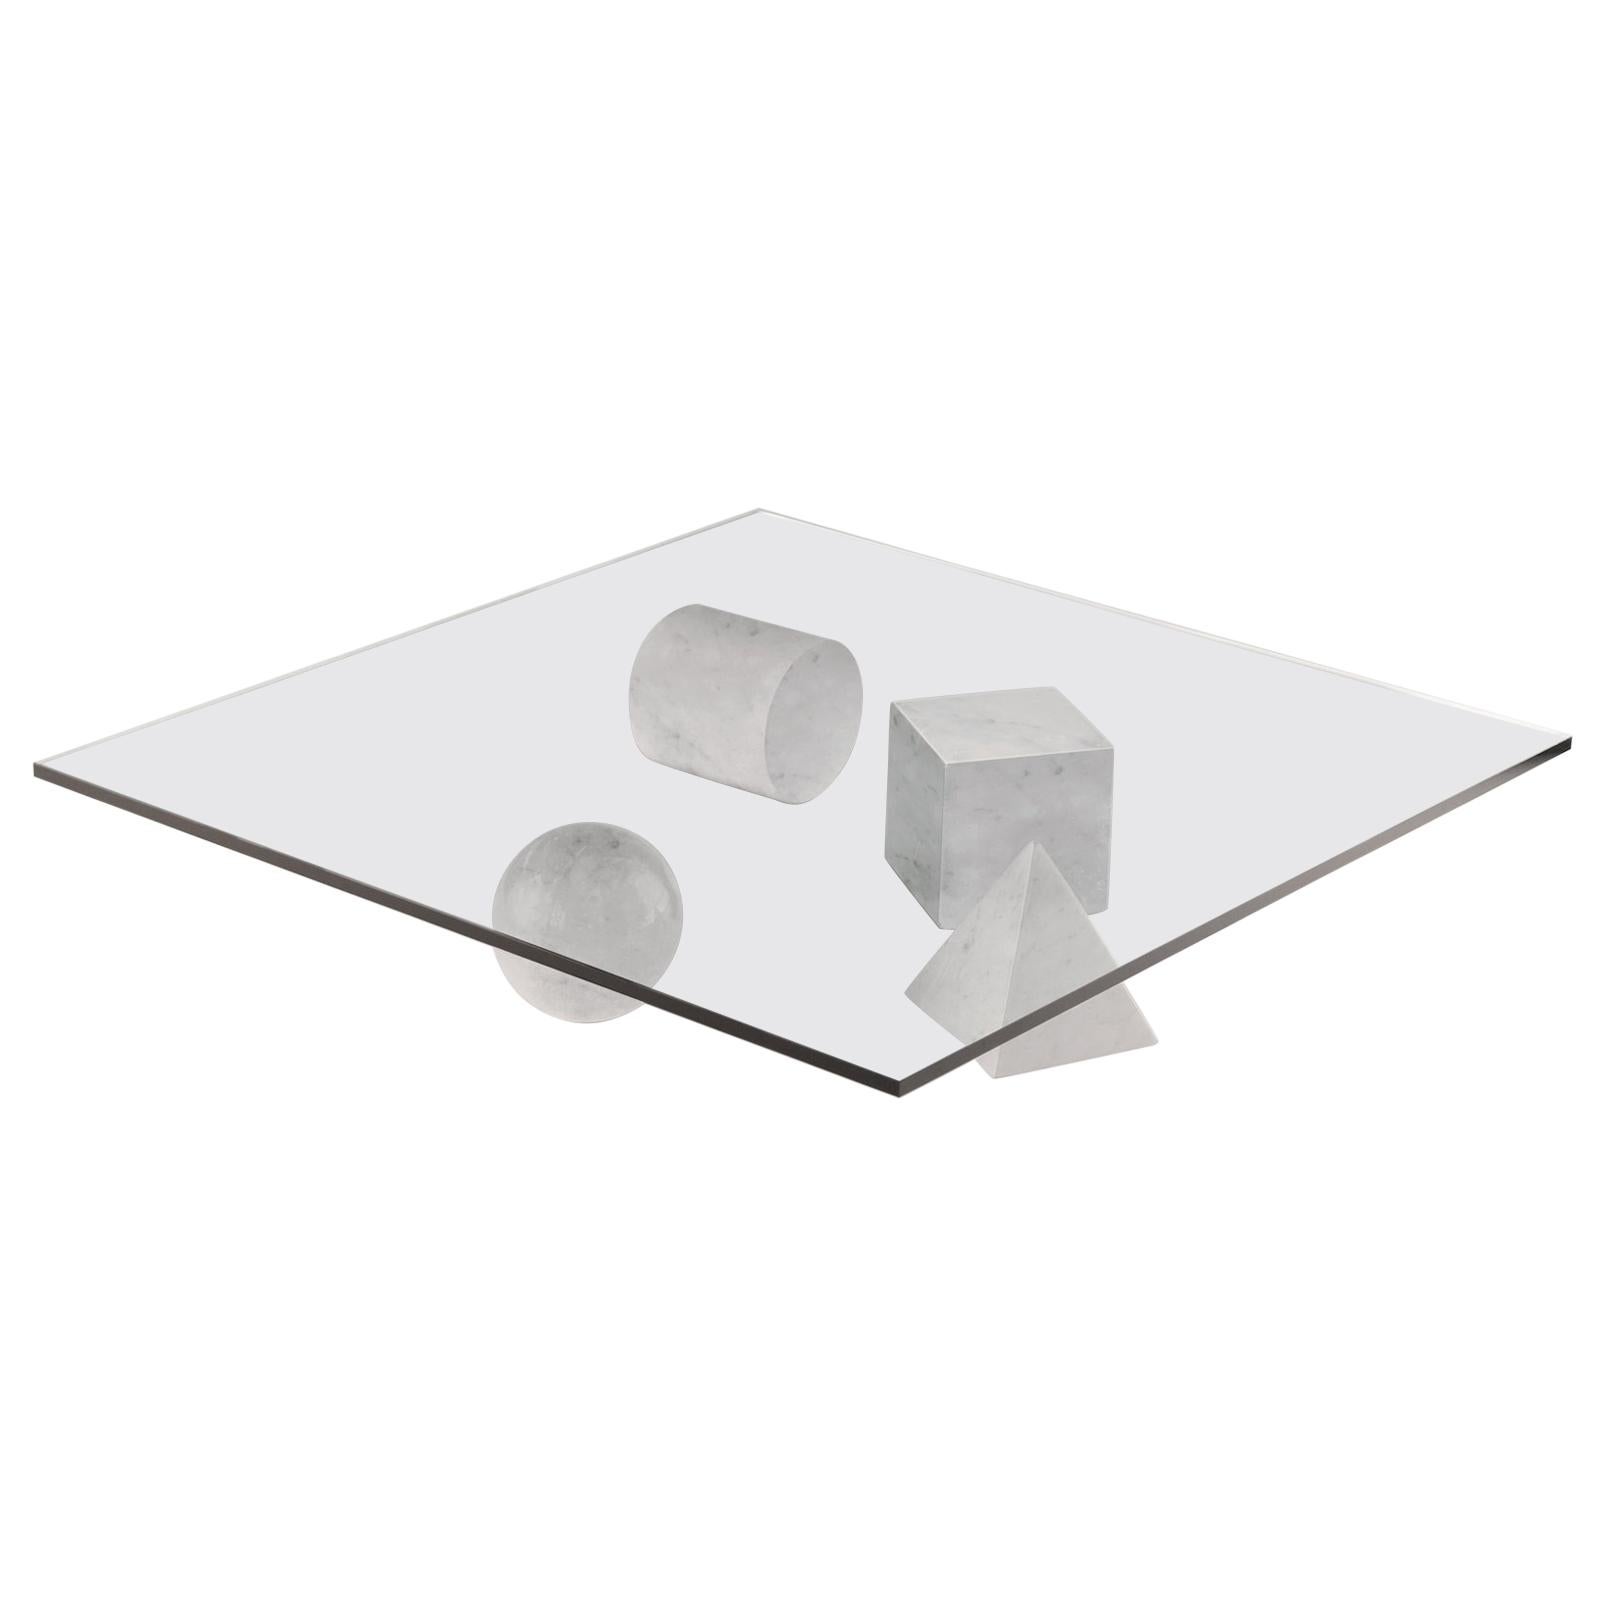 En vente : White (Carrara White) Table Martinelli Luce Metafora 1979 par Lella et Massimo Vignelli